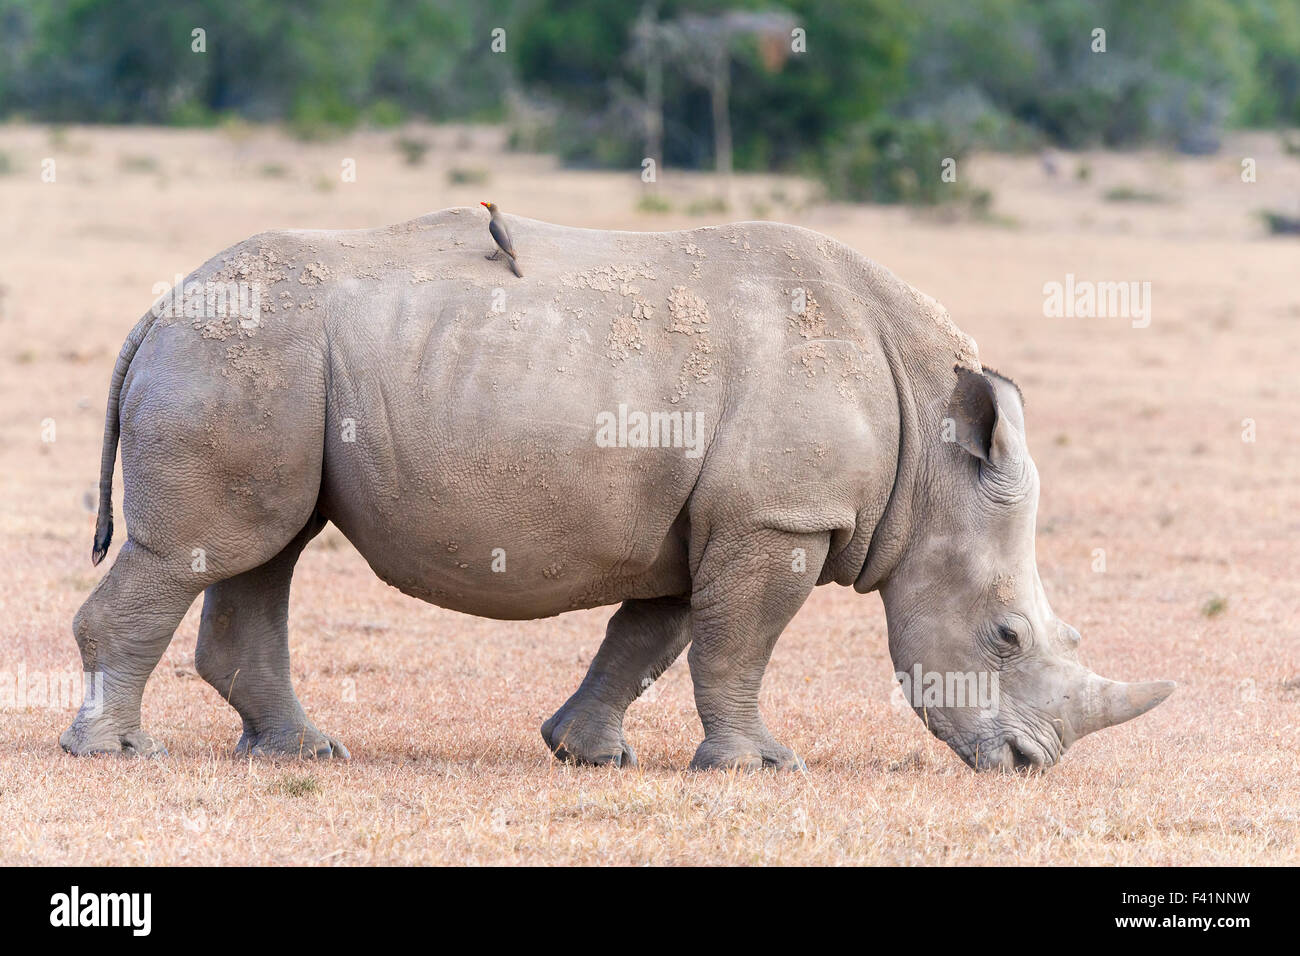 White Rhinoceros (Ceratotherium simum) with oxpecker (Buphagus sp.) on back, Ol Pejeta Reserve, Kenya Stock Photo